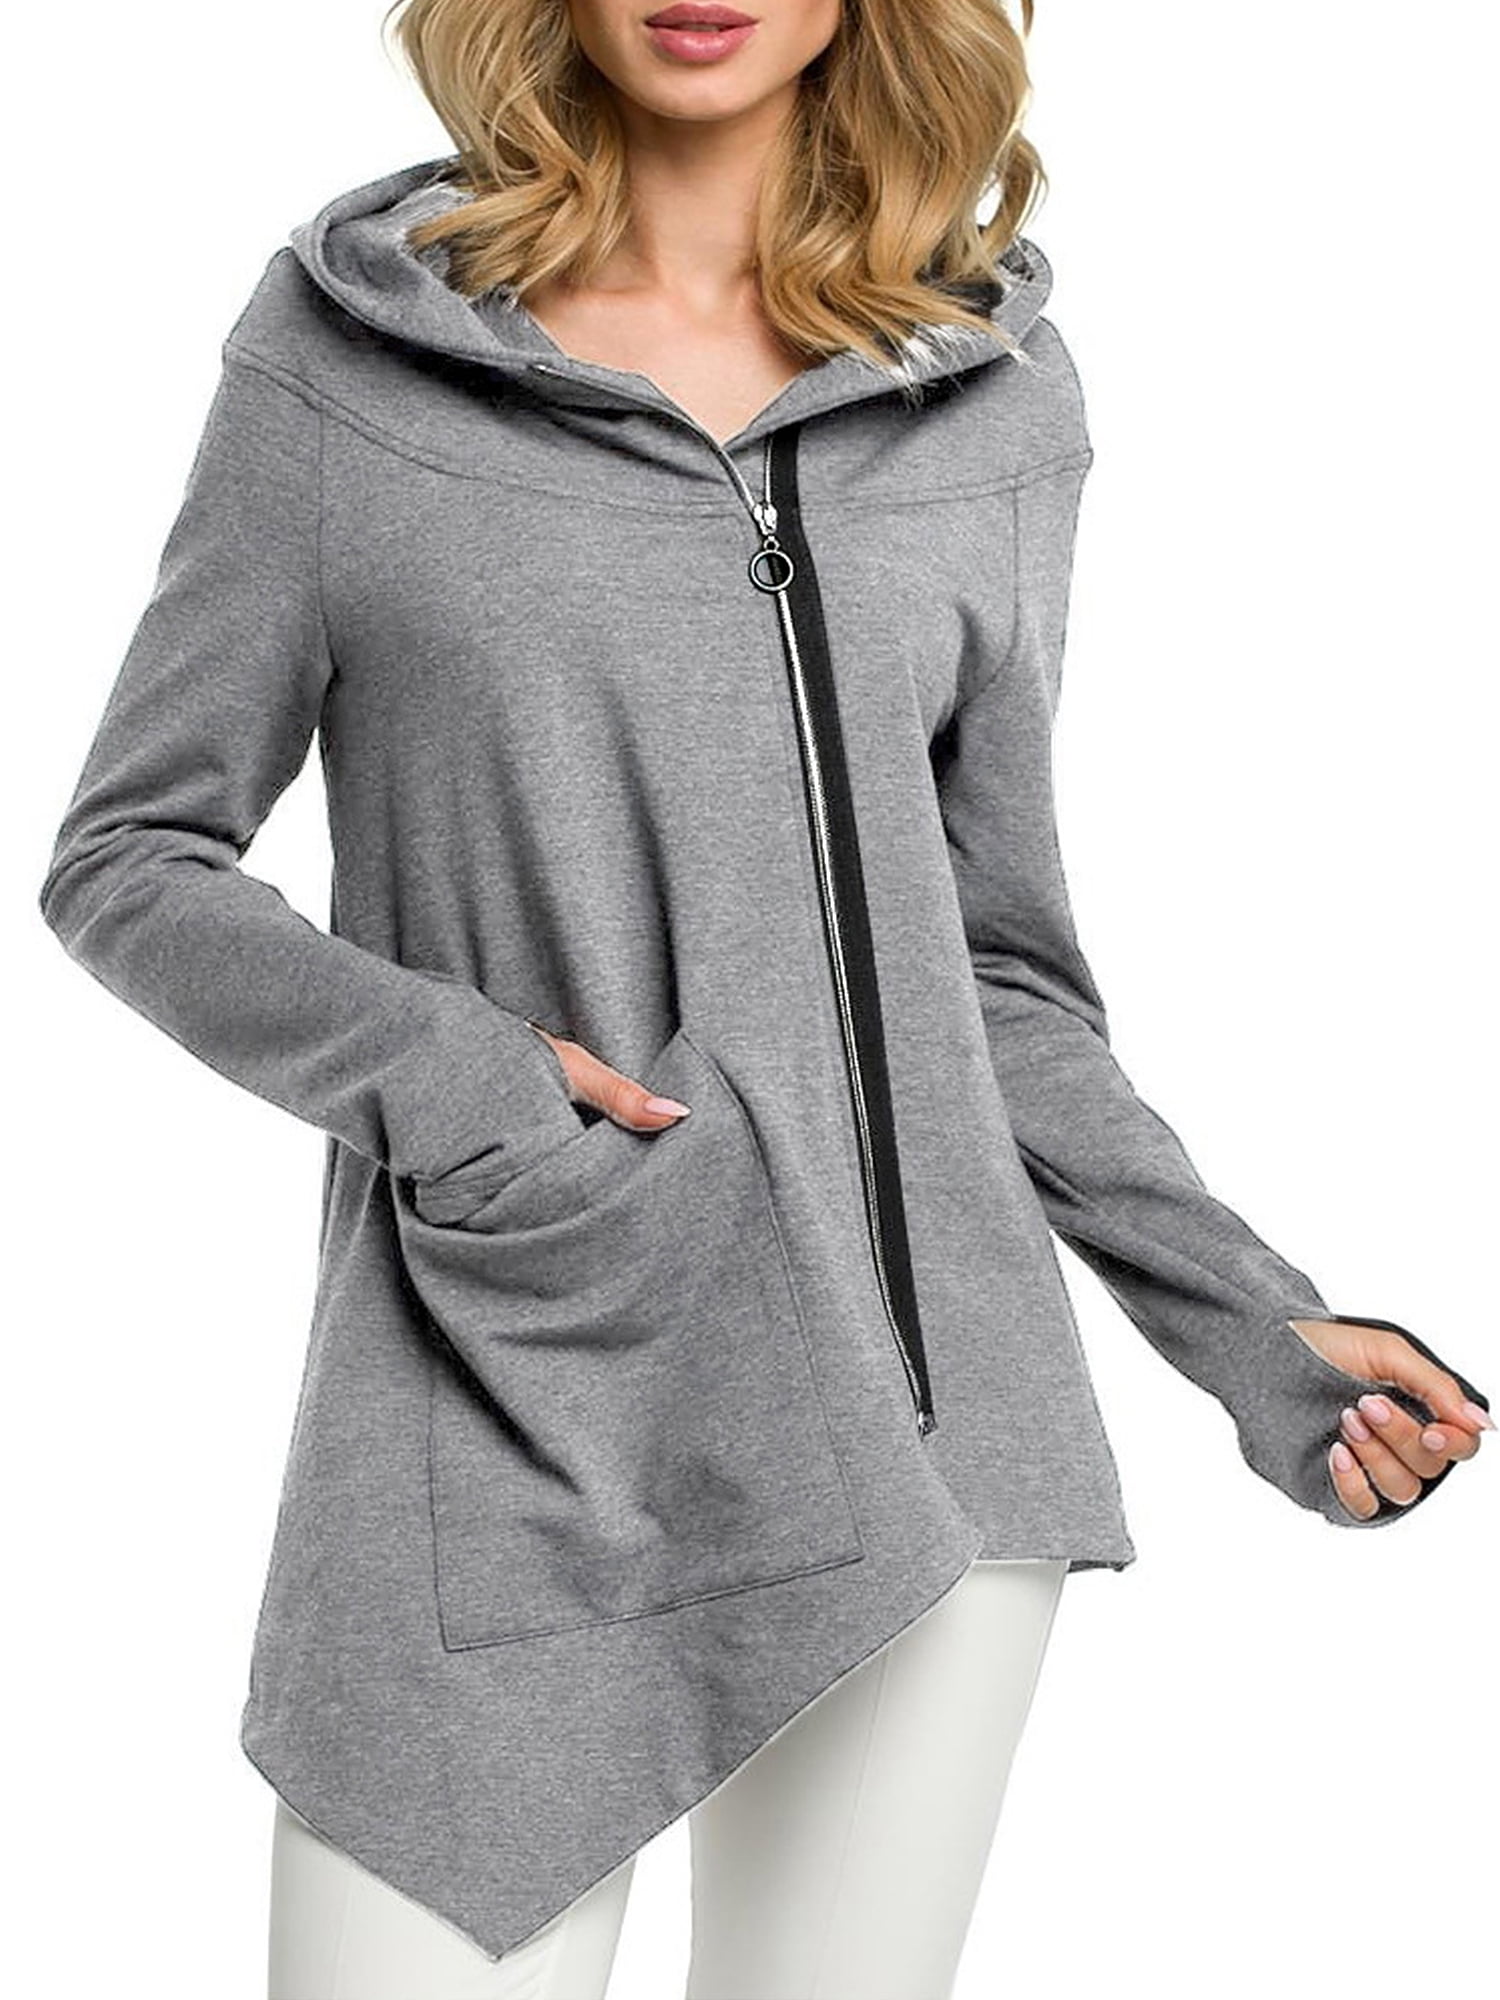 Redshop Fashion Women Warm Fluffy Causal Sweatshirt Hooded Winter Zipper Casual Blouse Pullover